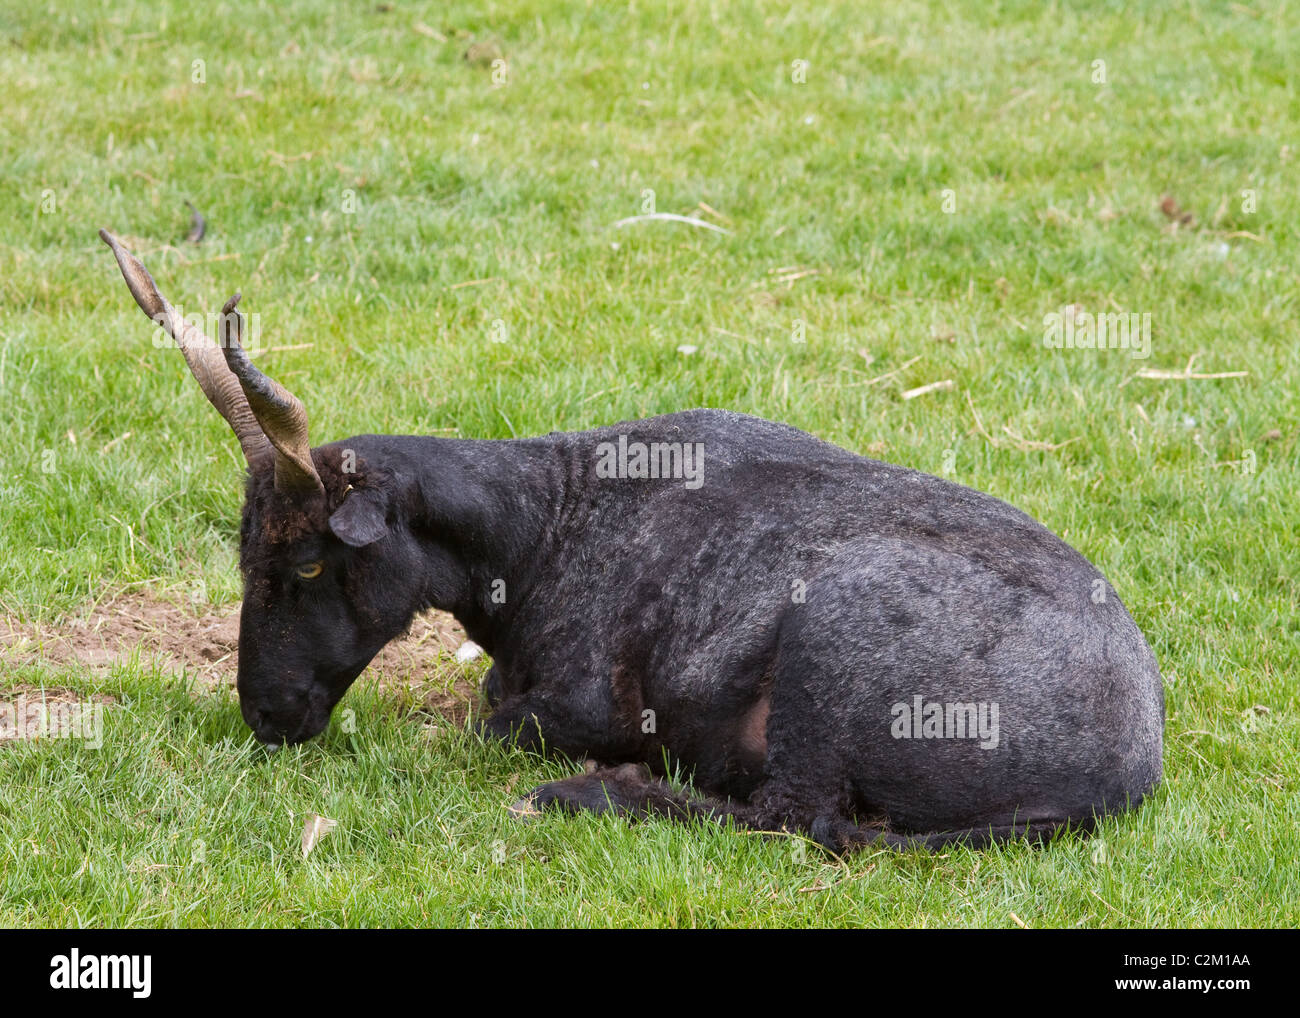 Goat Closeup laying on the grass feeding Stock Photo